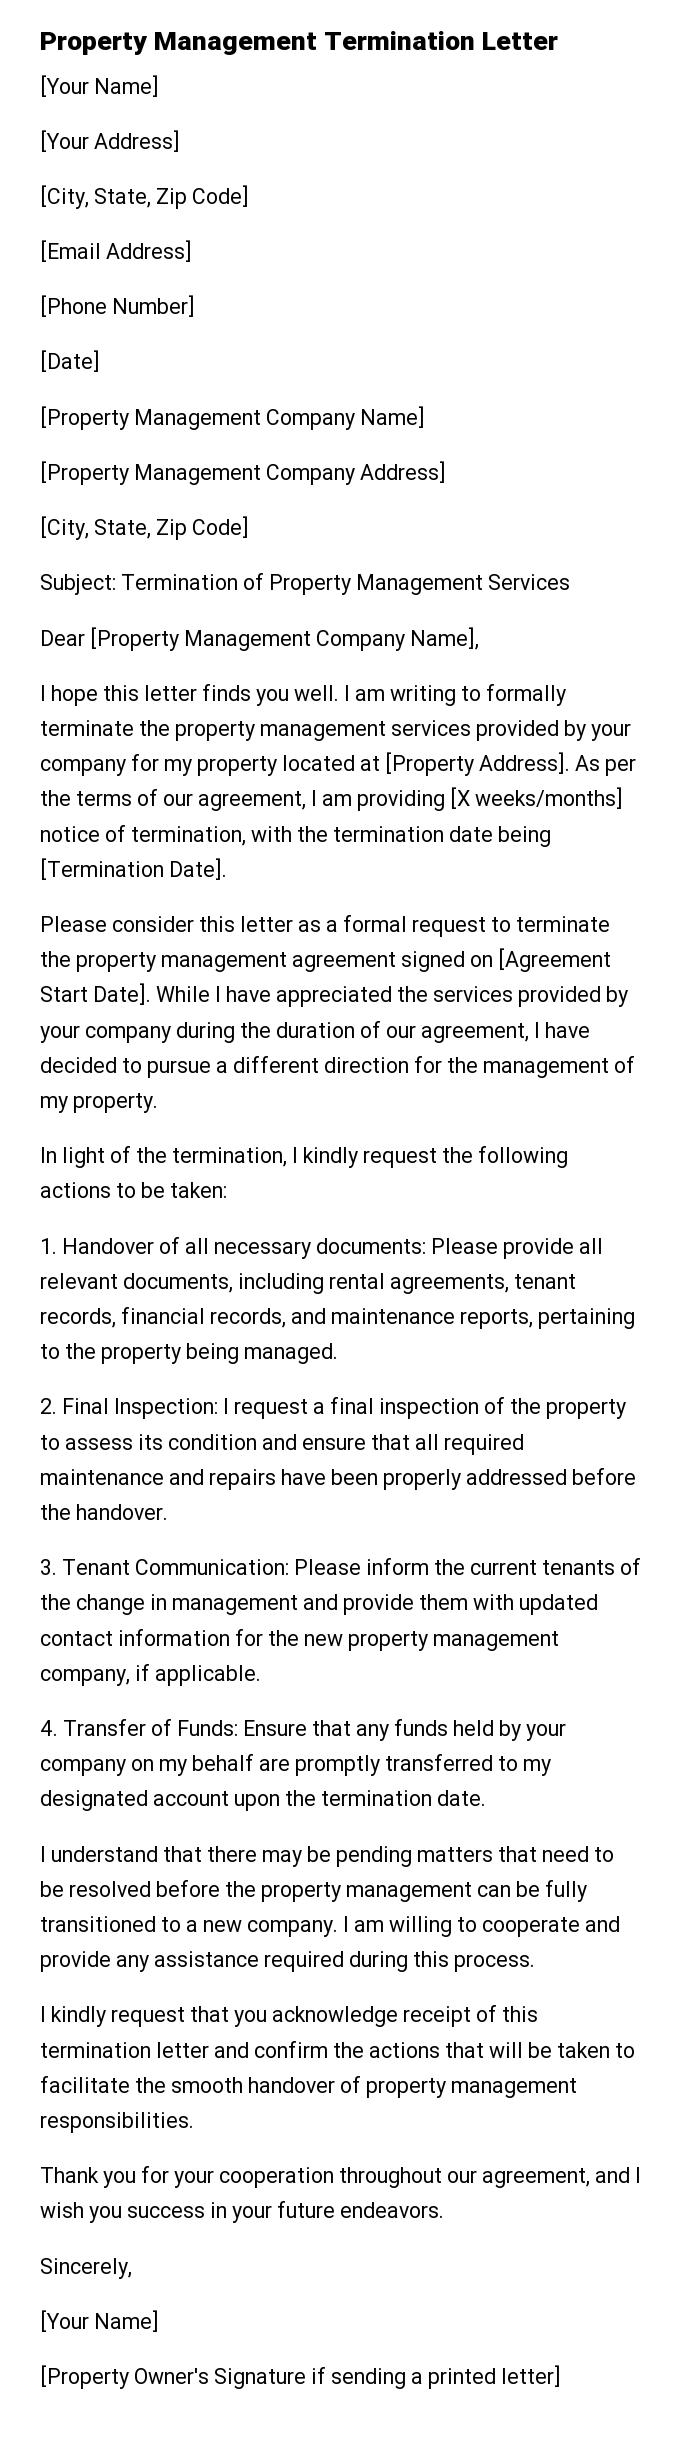 Property Management Termination Letter